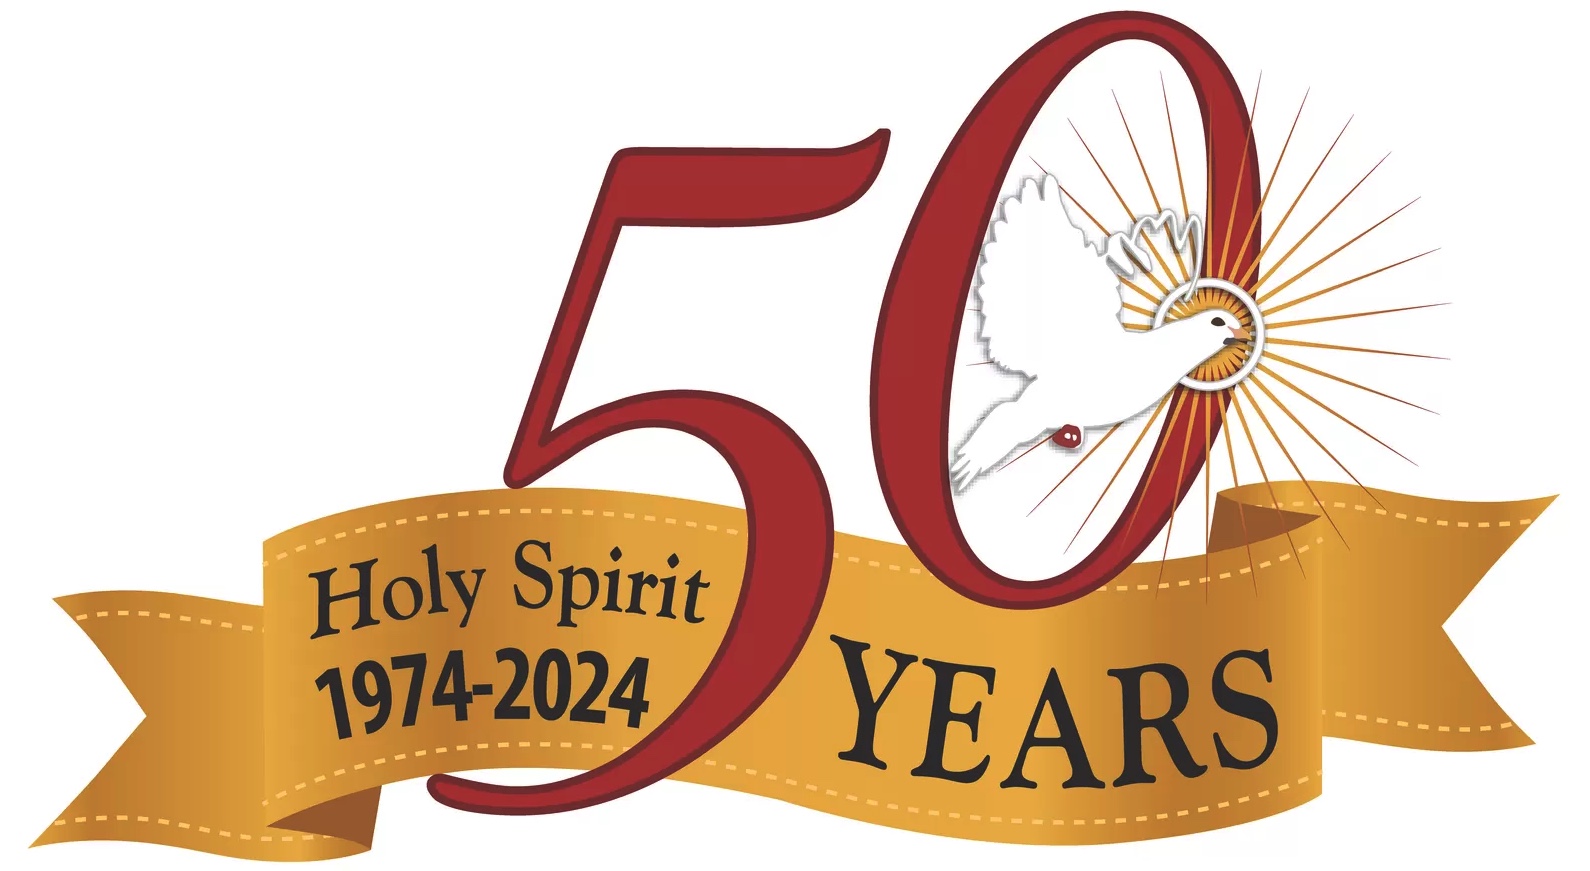 The 50th Anniversary Holy Spirit CC logo